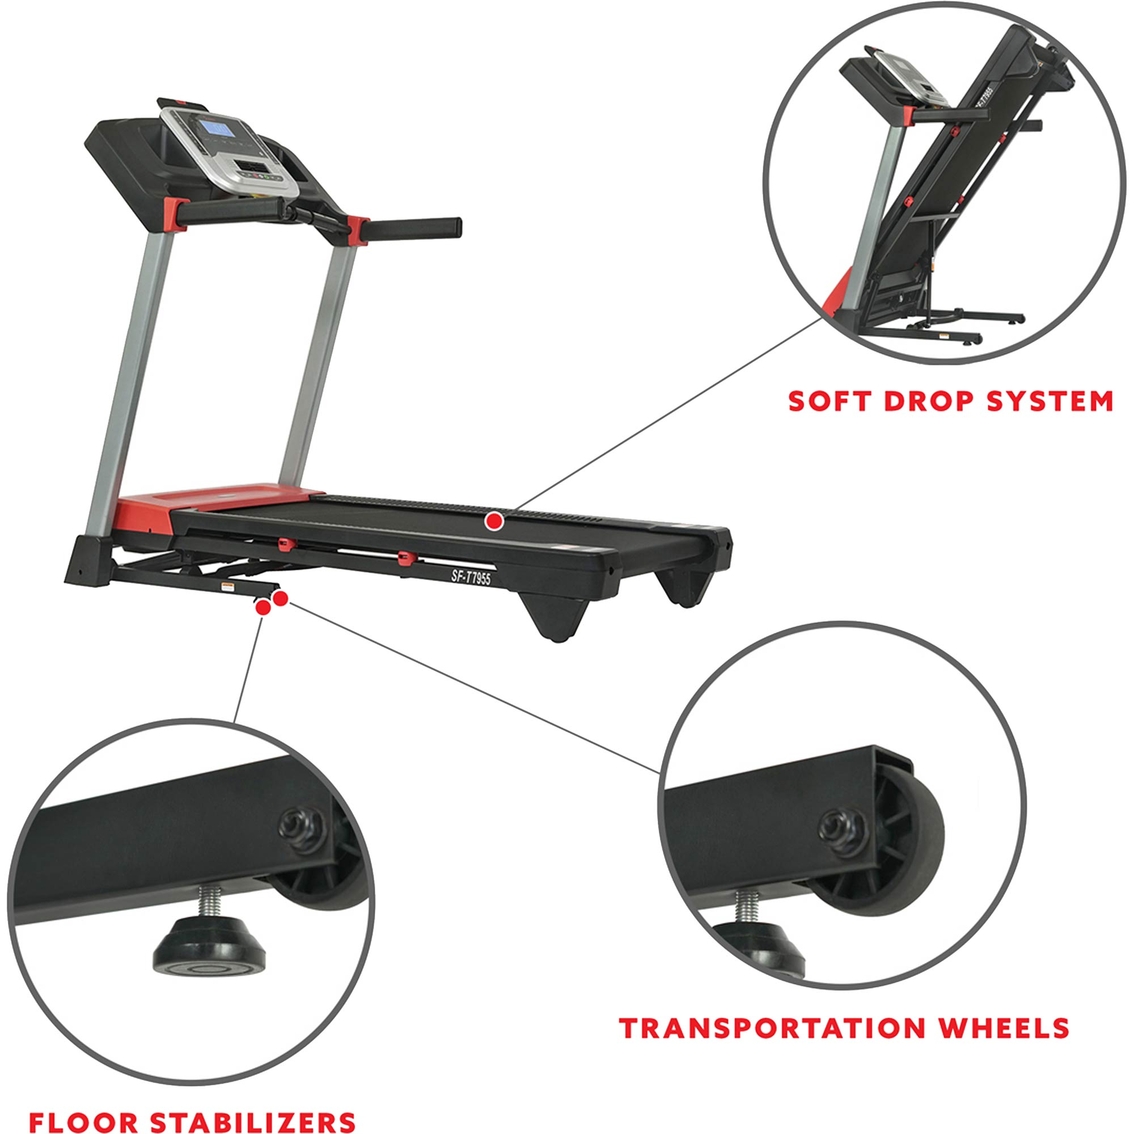 Sunny Health & Fitness Evo-fit Incline Treadmill